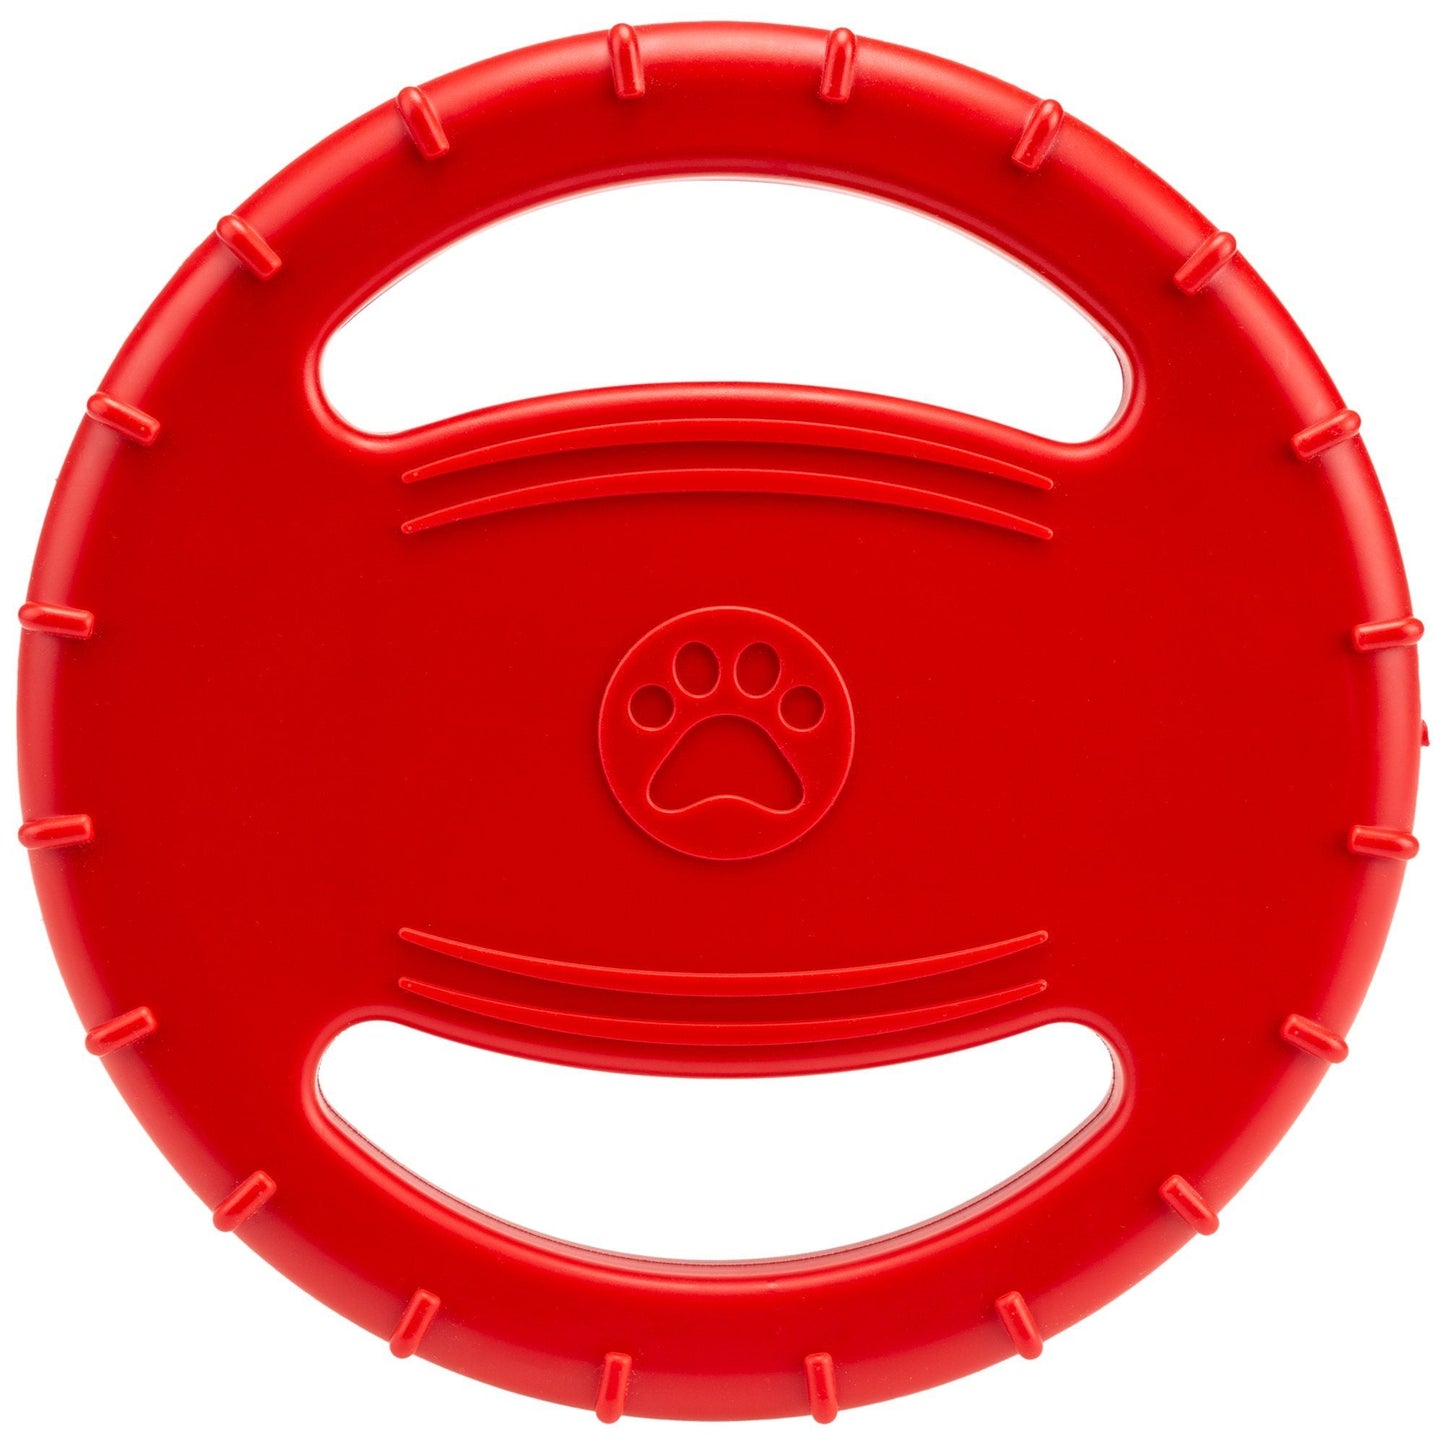 Flying Disc Dog Toy